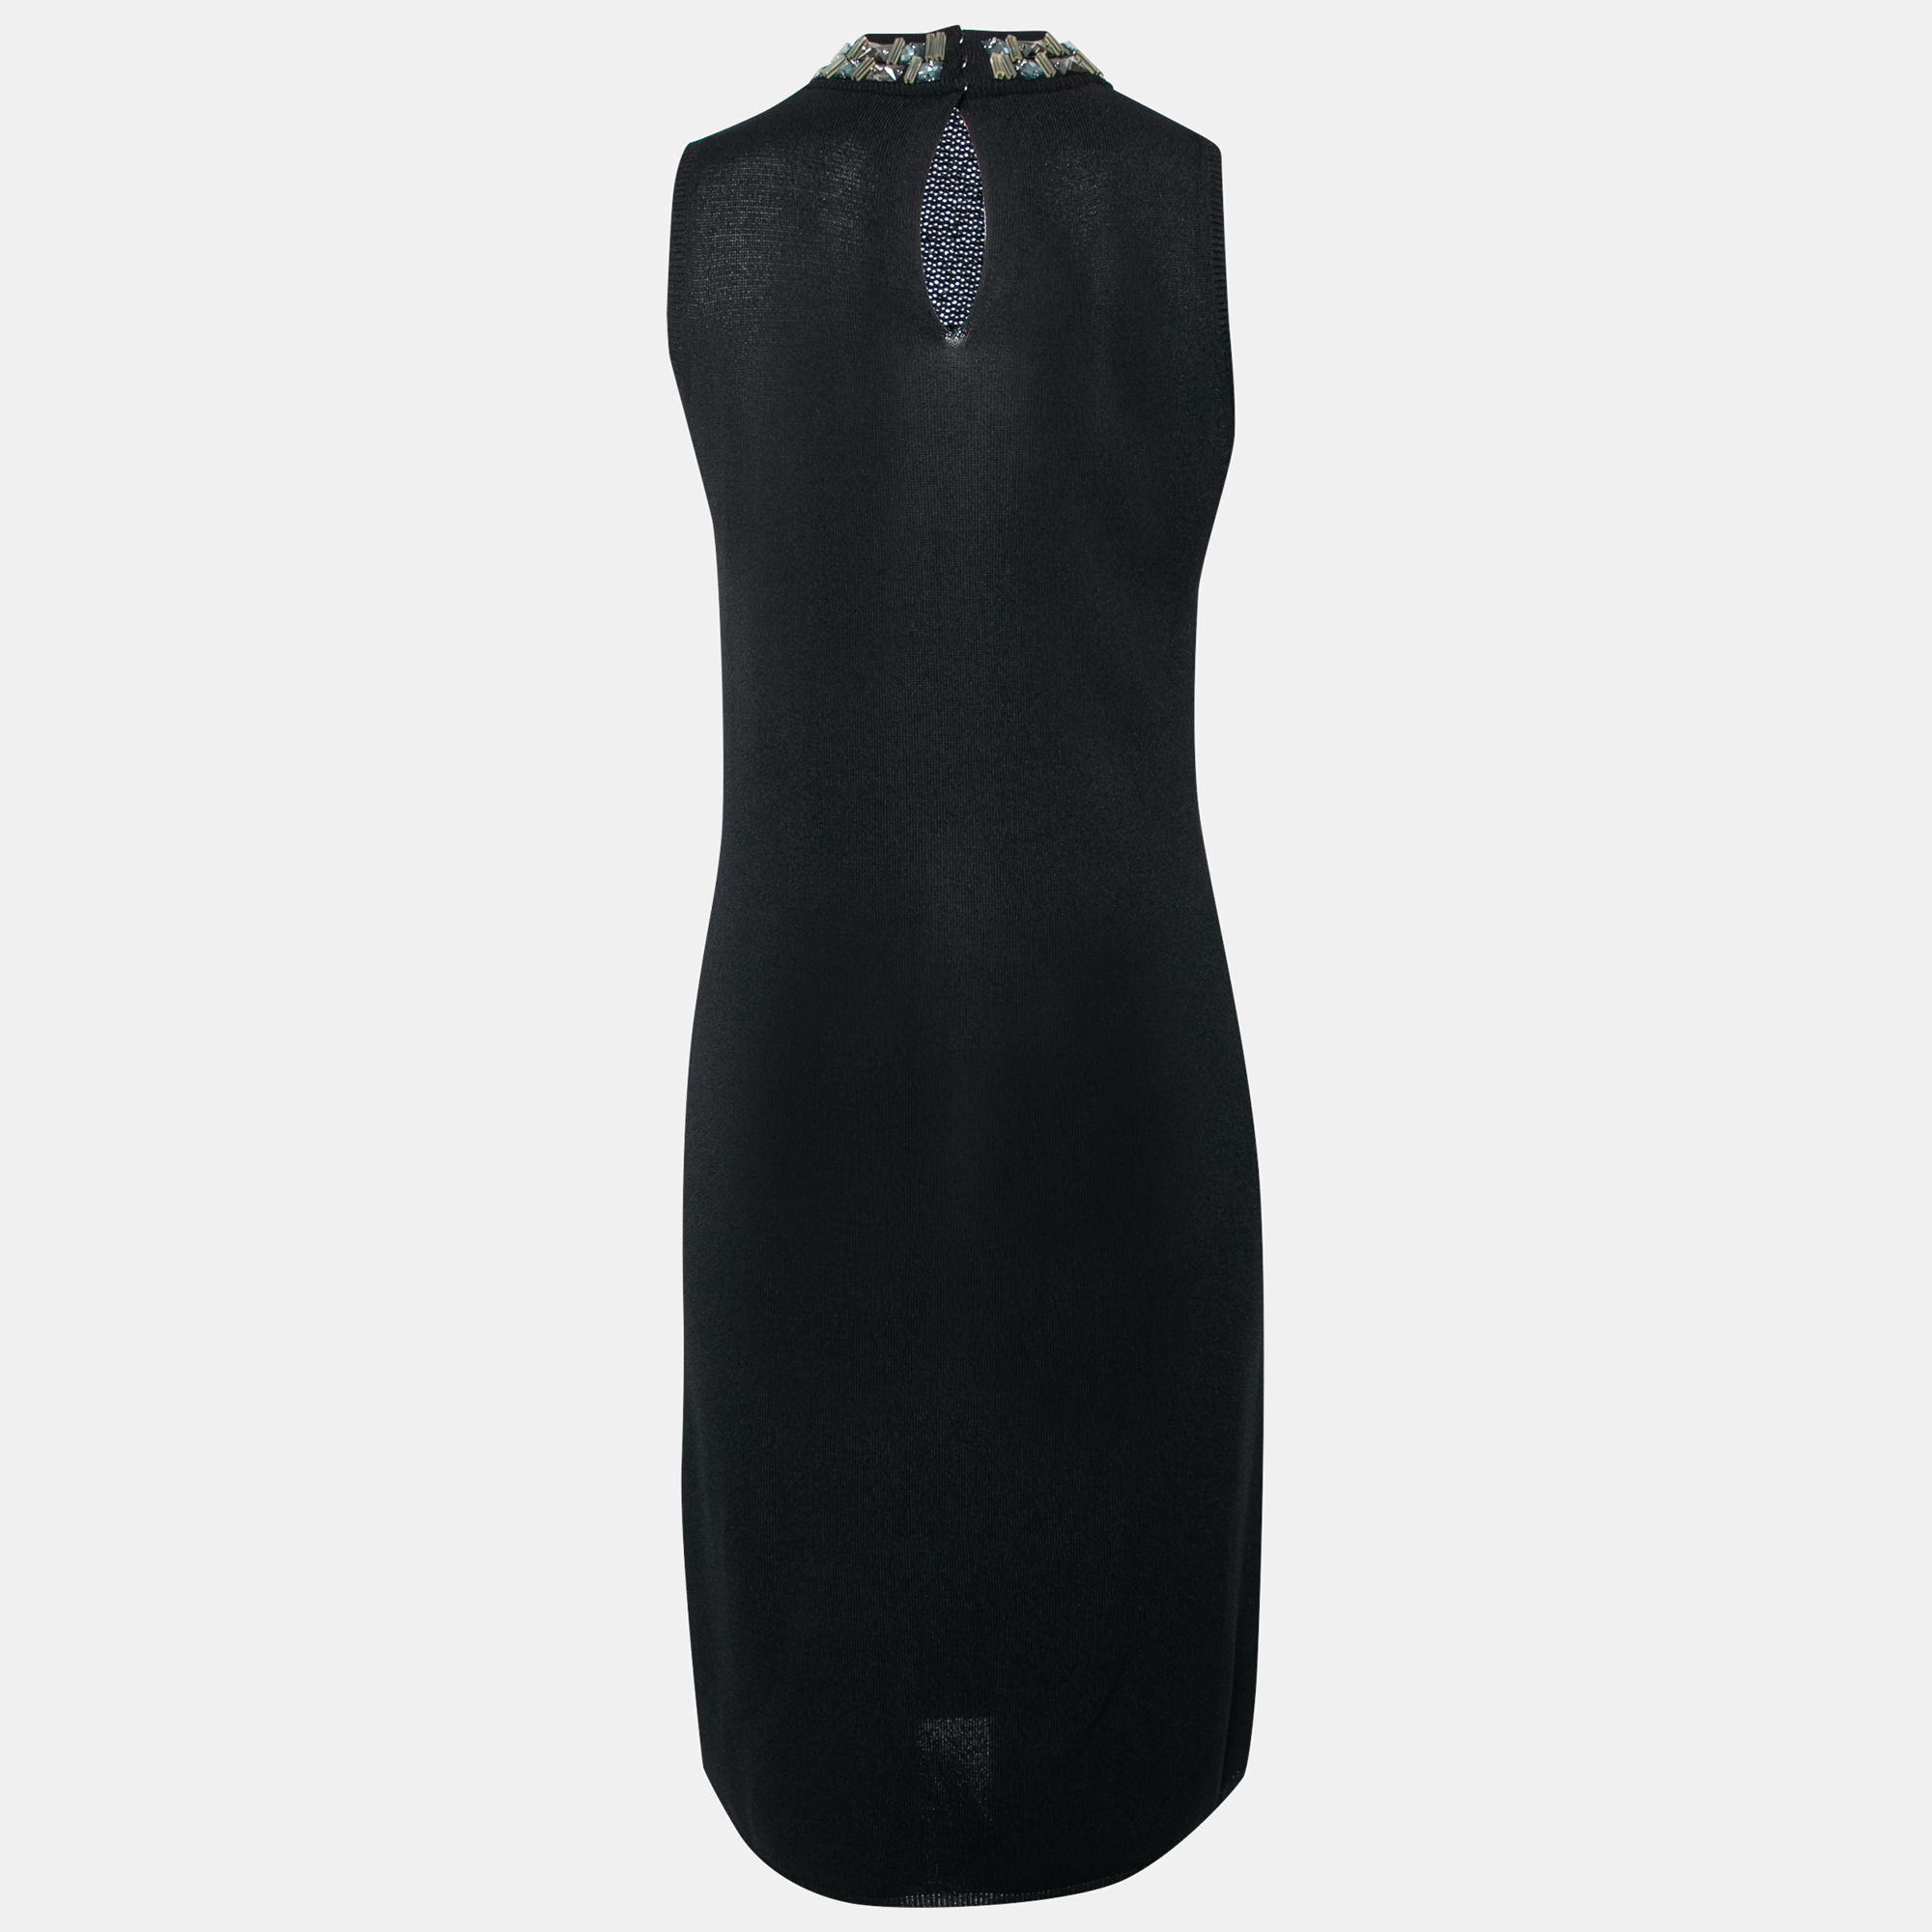 Prada Black Knit Embellished Neck Sleeveless Dress S  - buy with discount